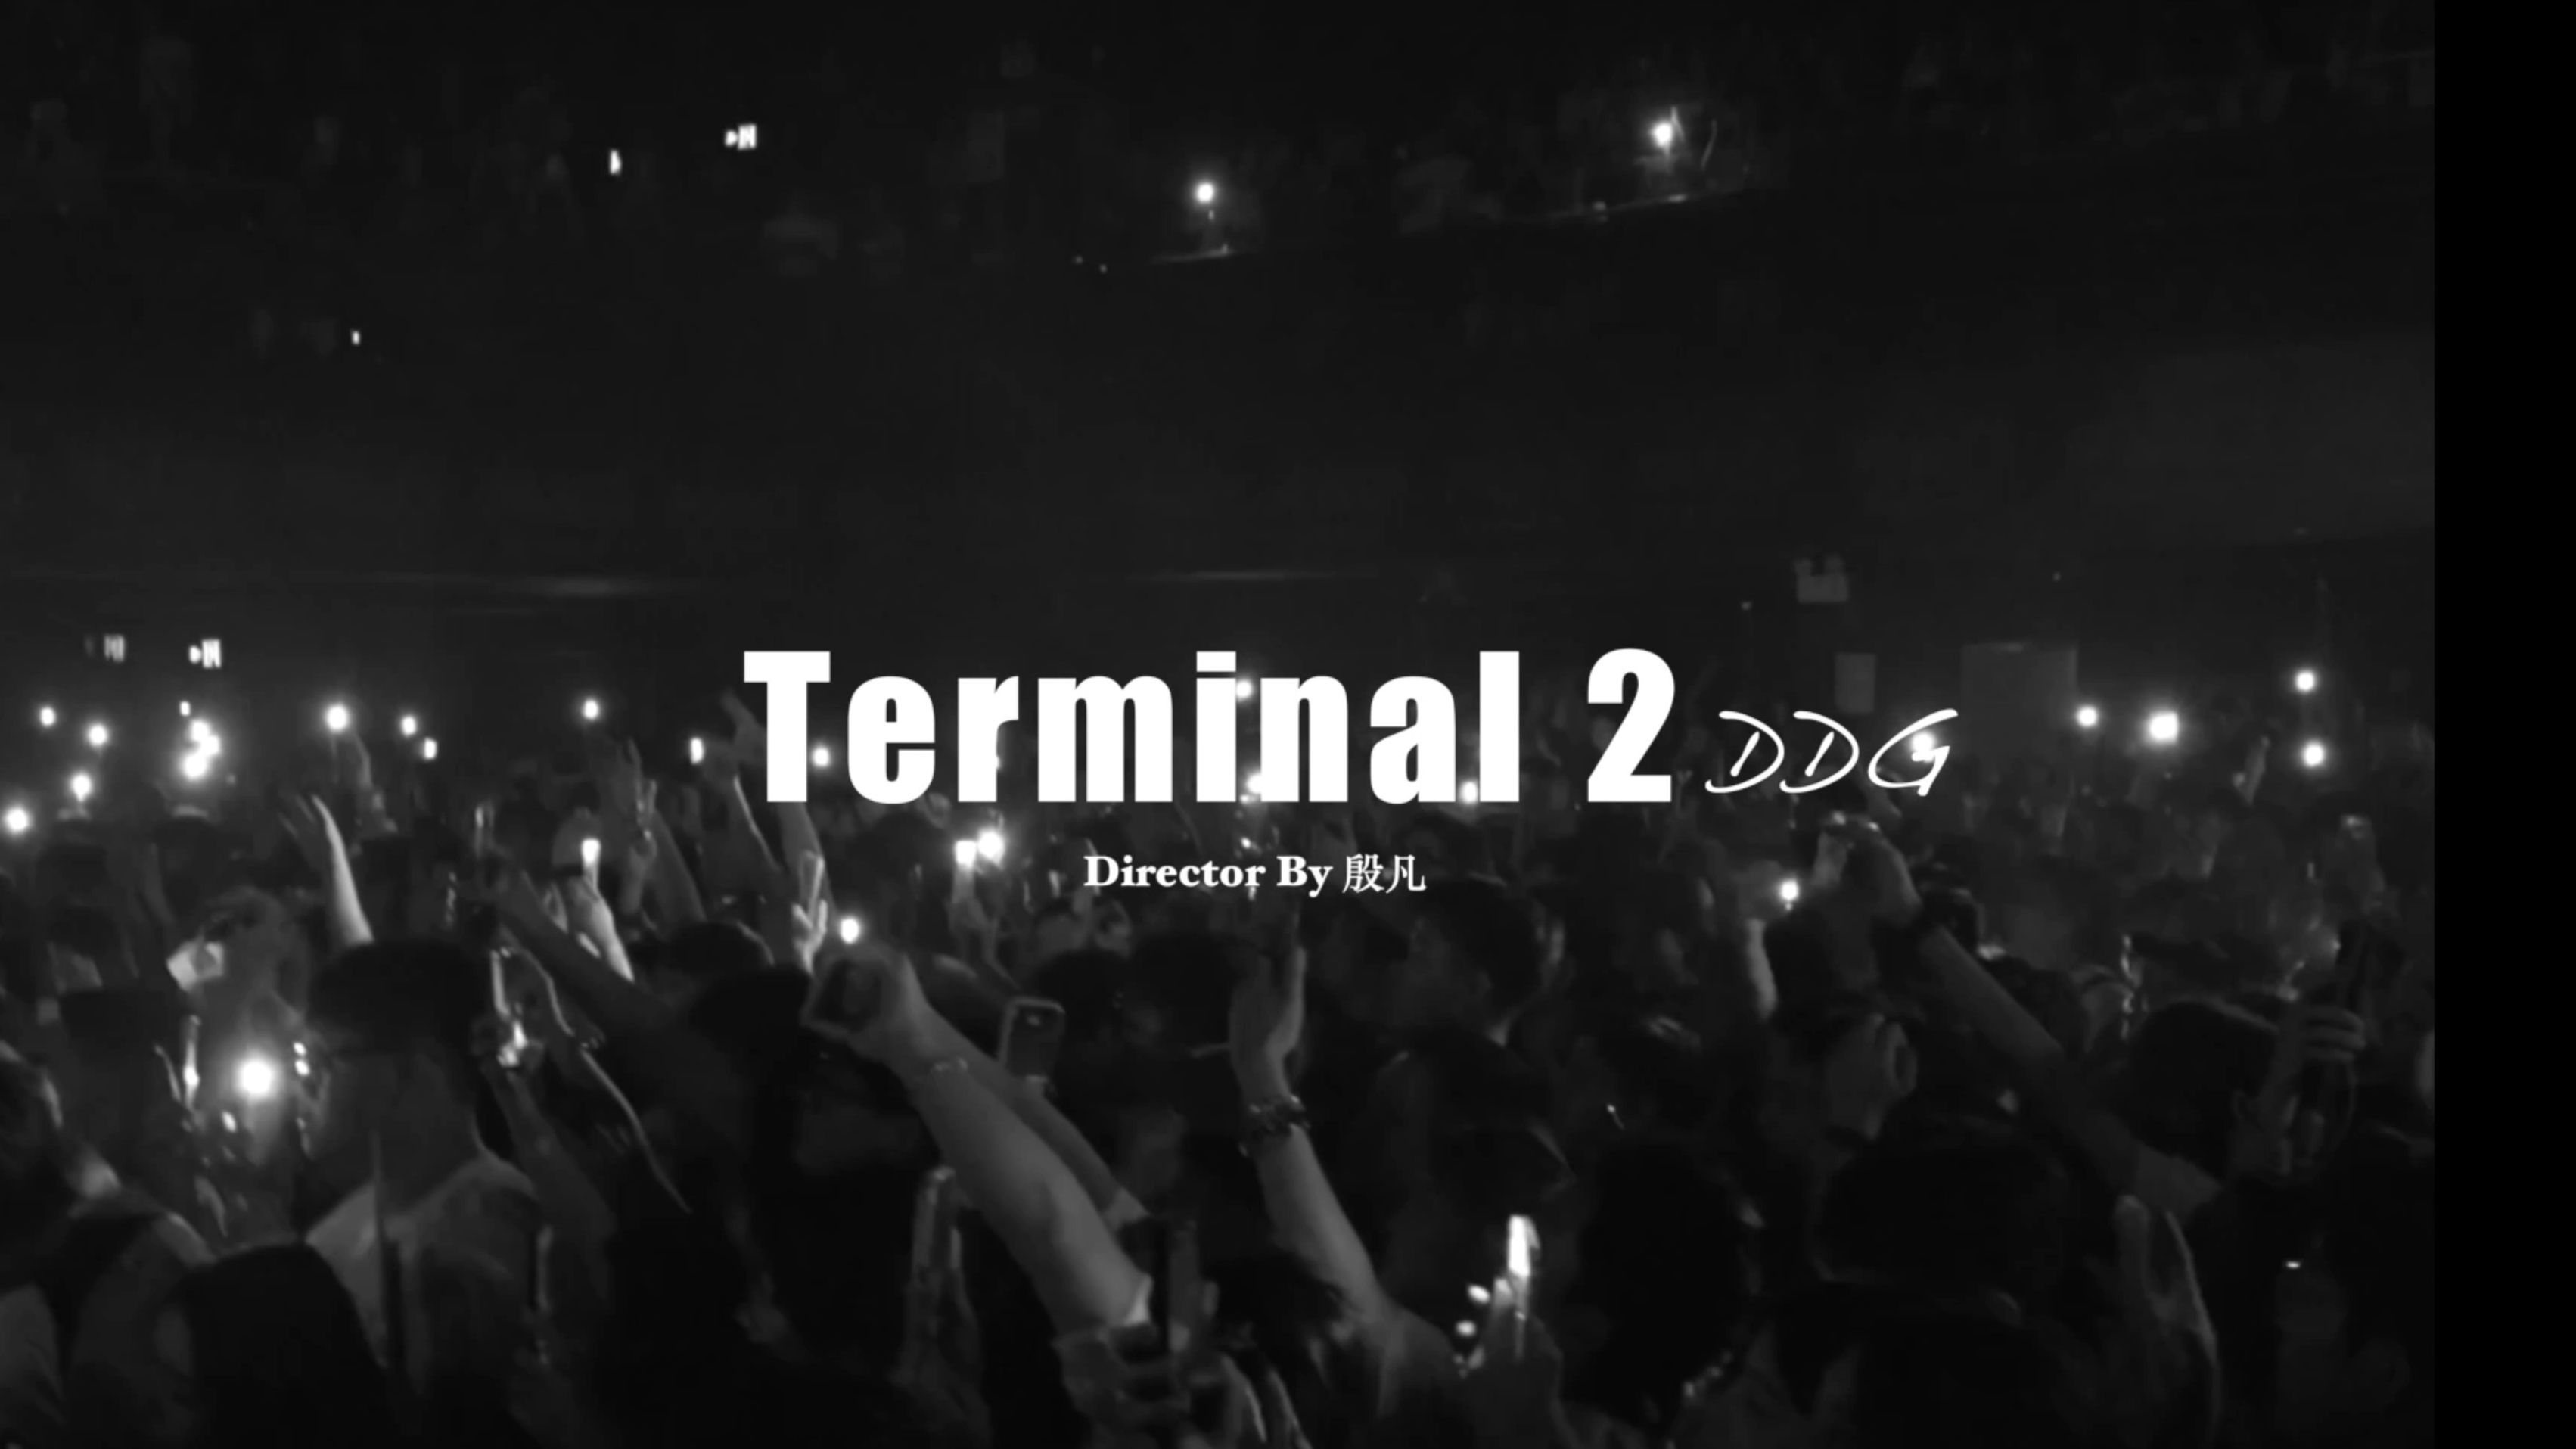 邓典果DDG - 二号航站楼（Terminal 2） Official Music Video